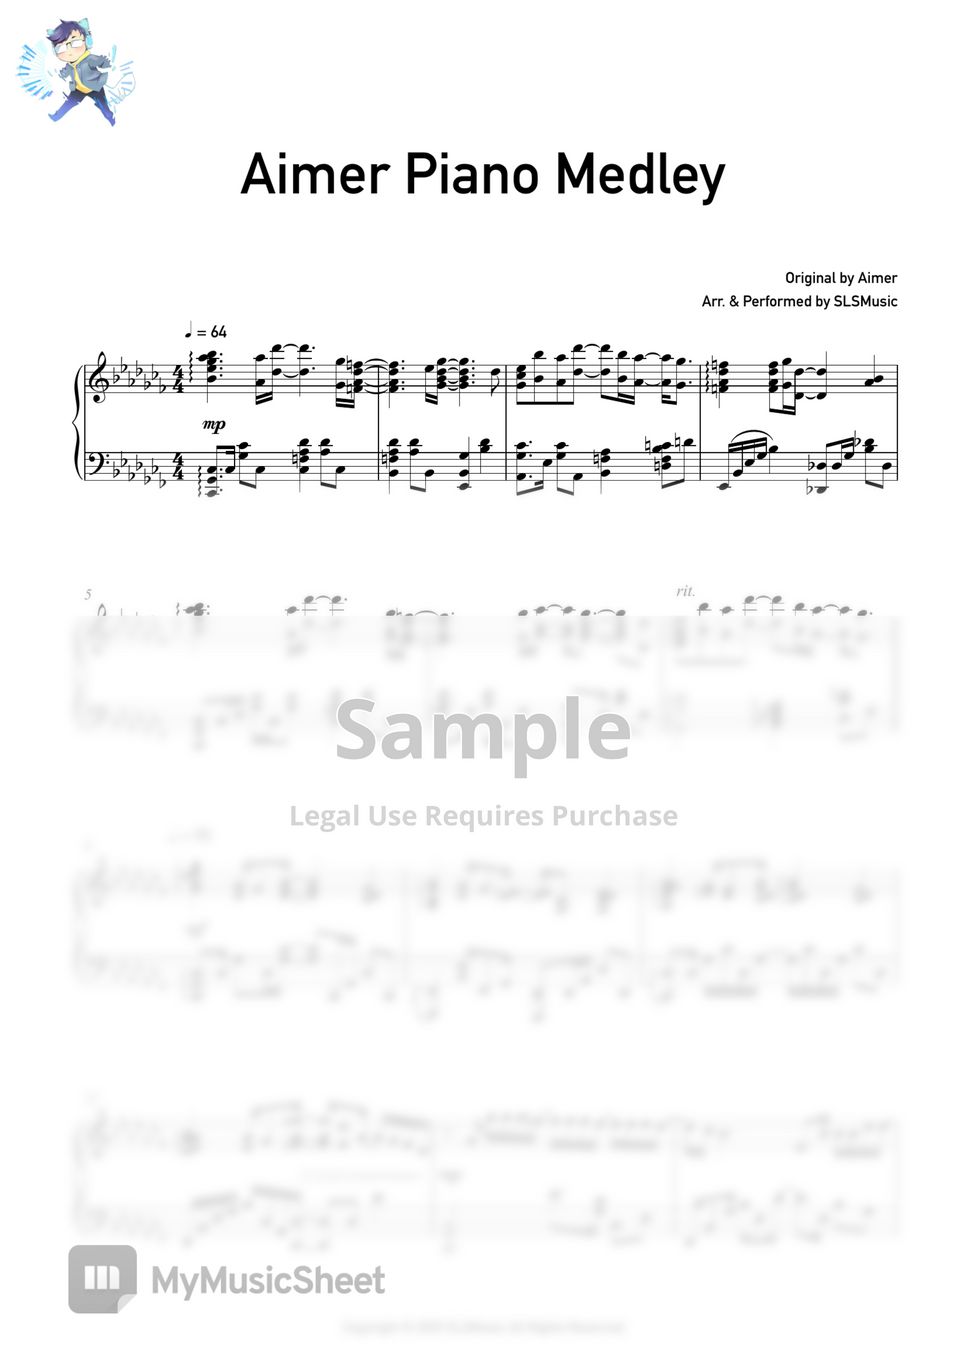 Aimer - Aimer Piano Medley by SLSMusic